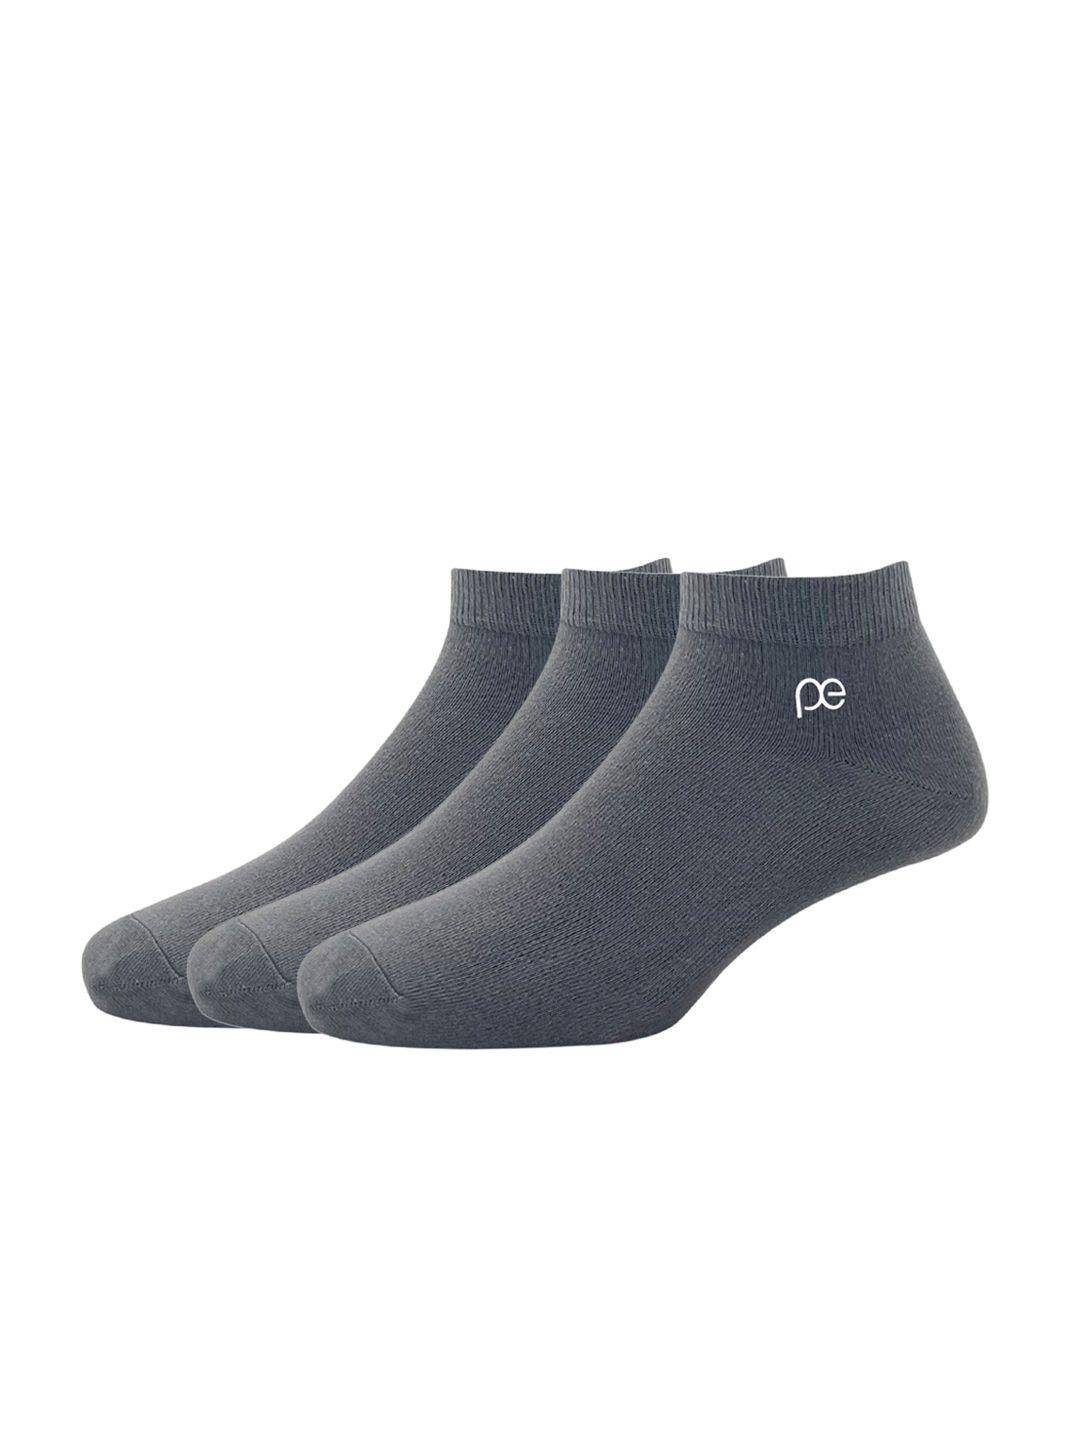 peter england men pack of 3 grey cotton ankle length socks